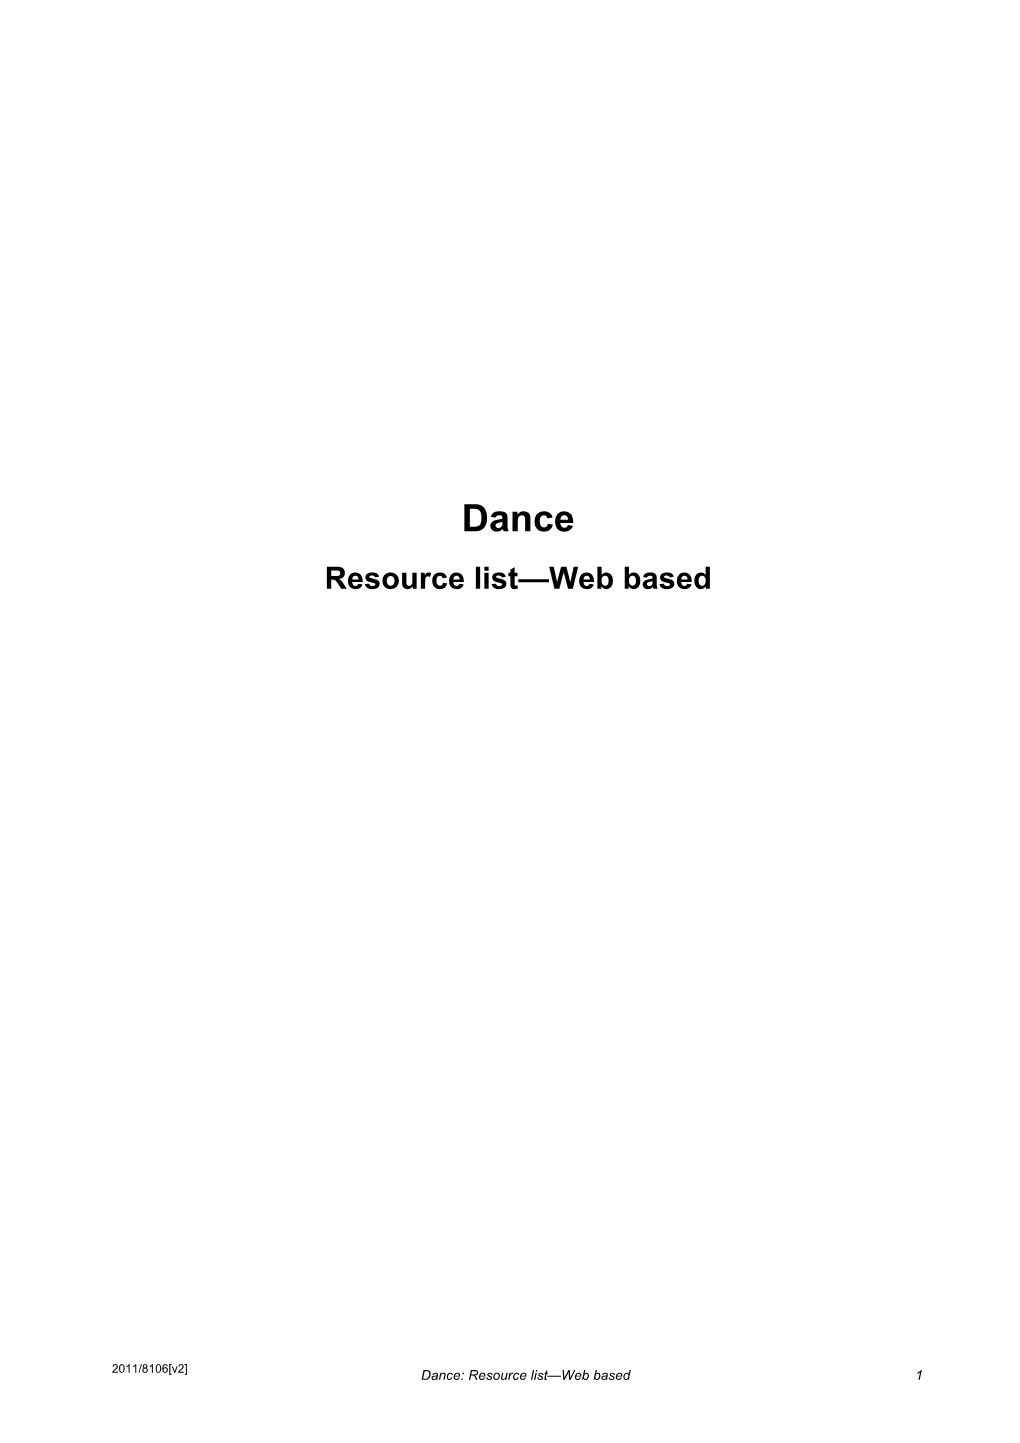 Dance Resource Lists Web Sites